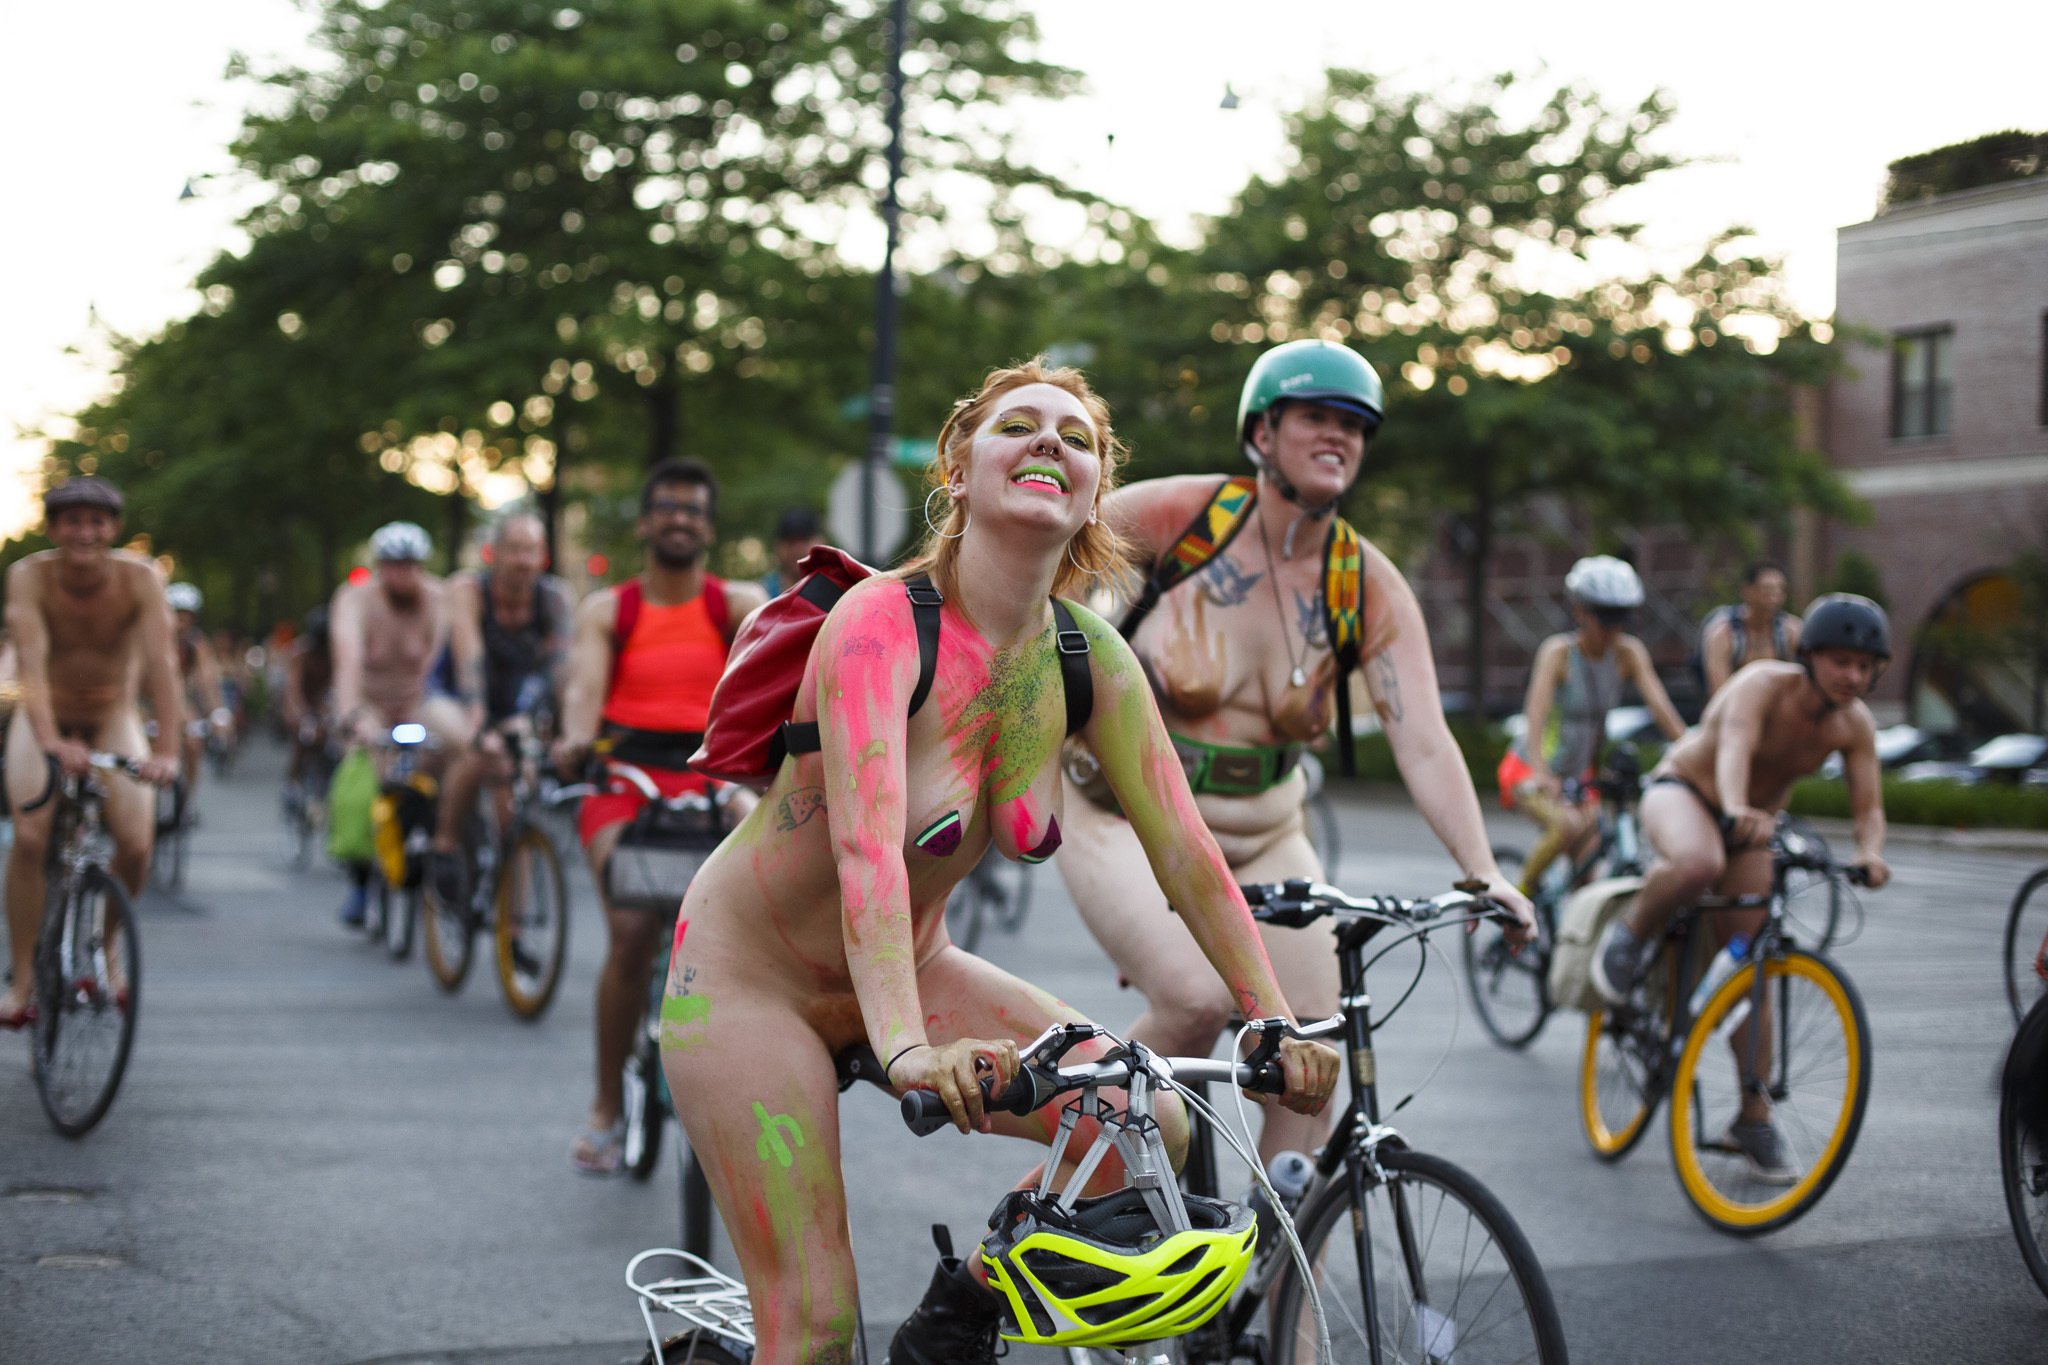 Philadelphia's Annual Naked Bike Ride Has Been Canceled